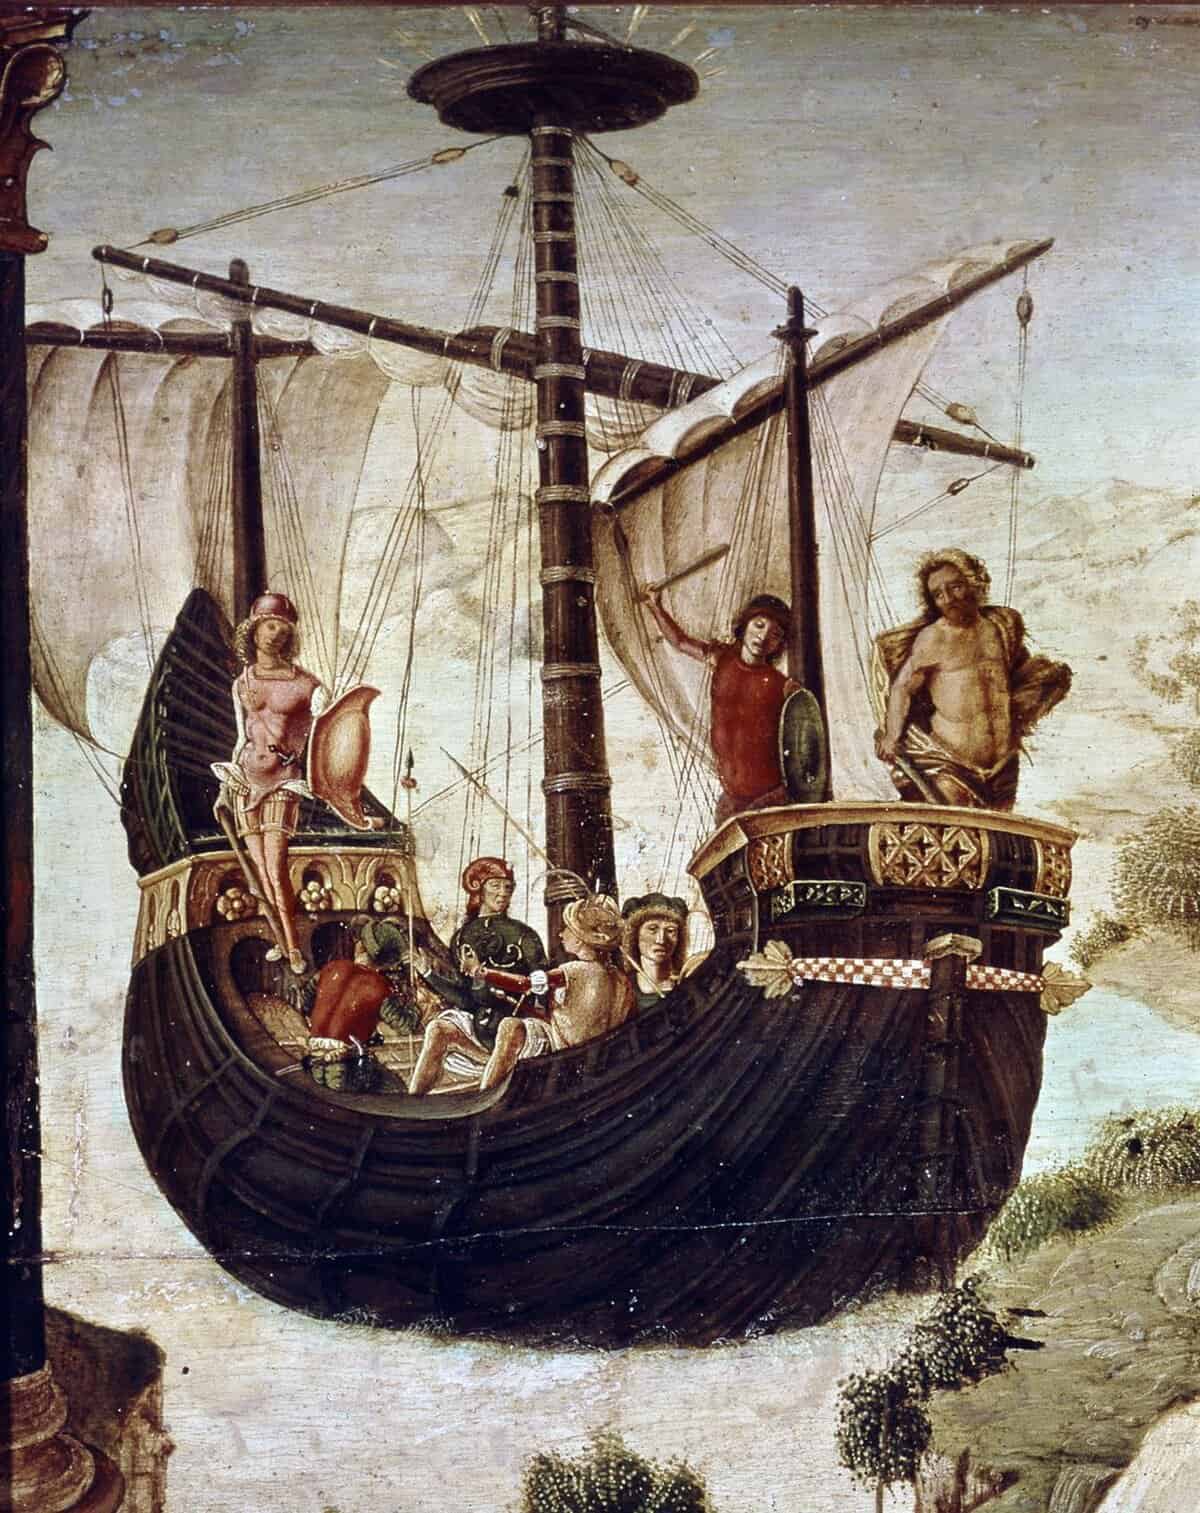 Jason and the Argonauts ship